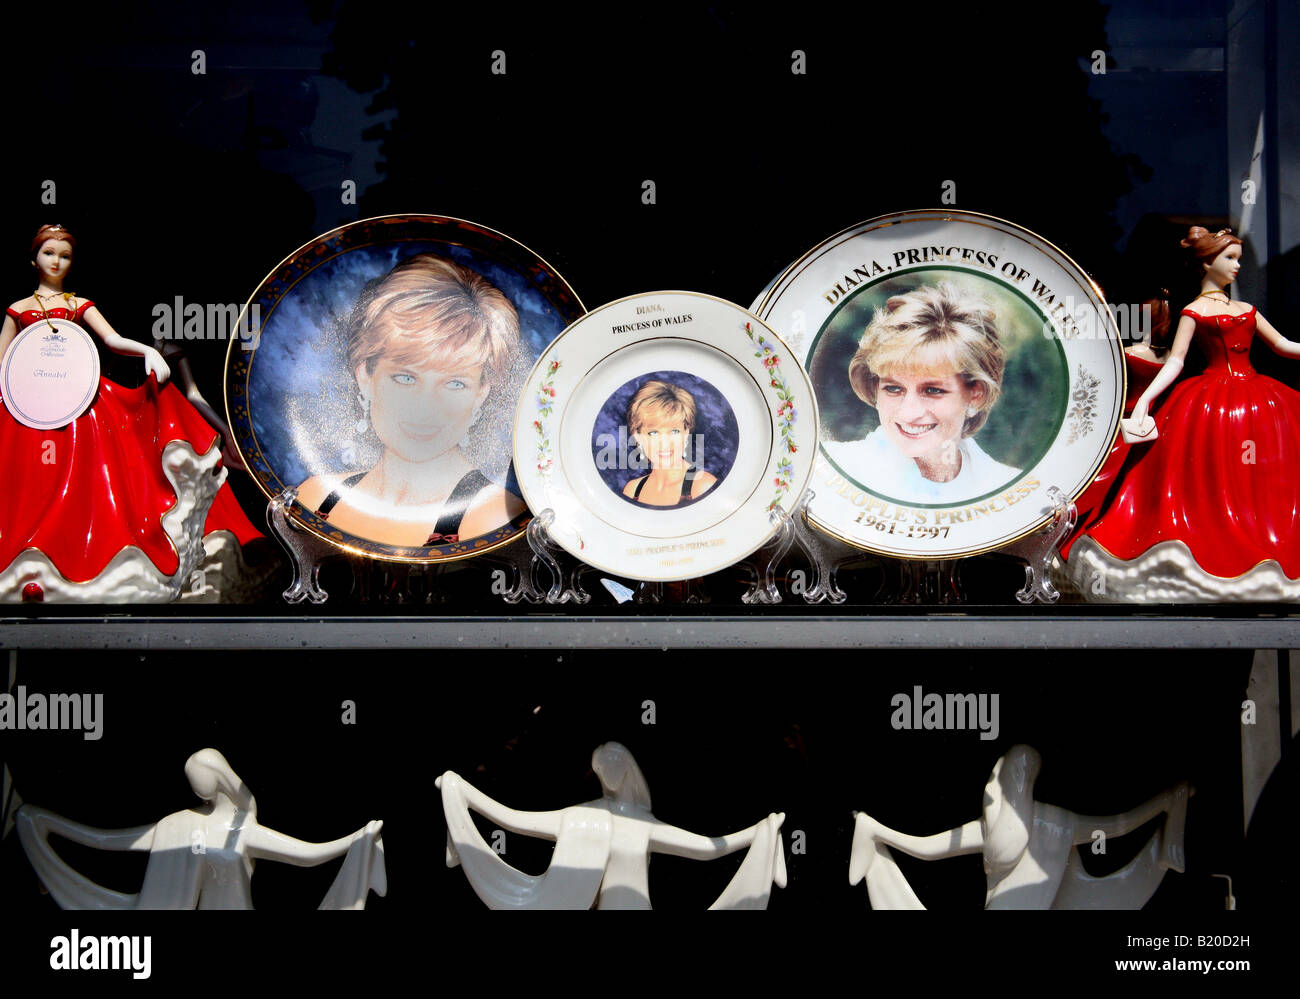 Princess Diana souvenirs on sale in London shop Stock Photo